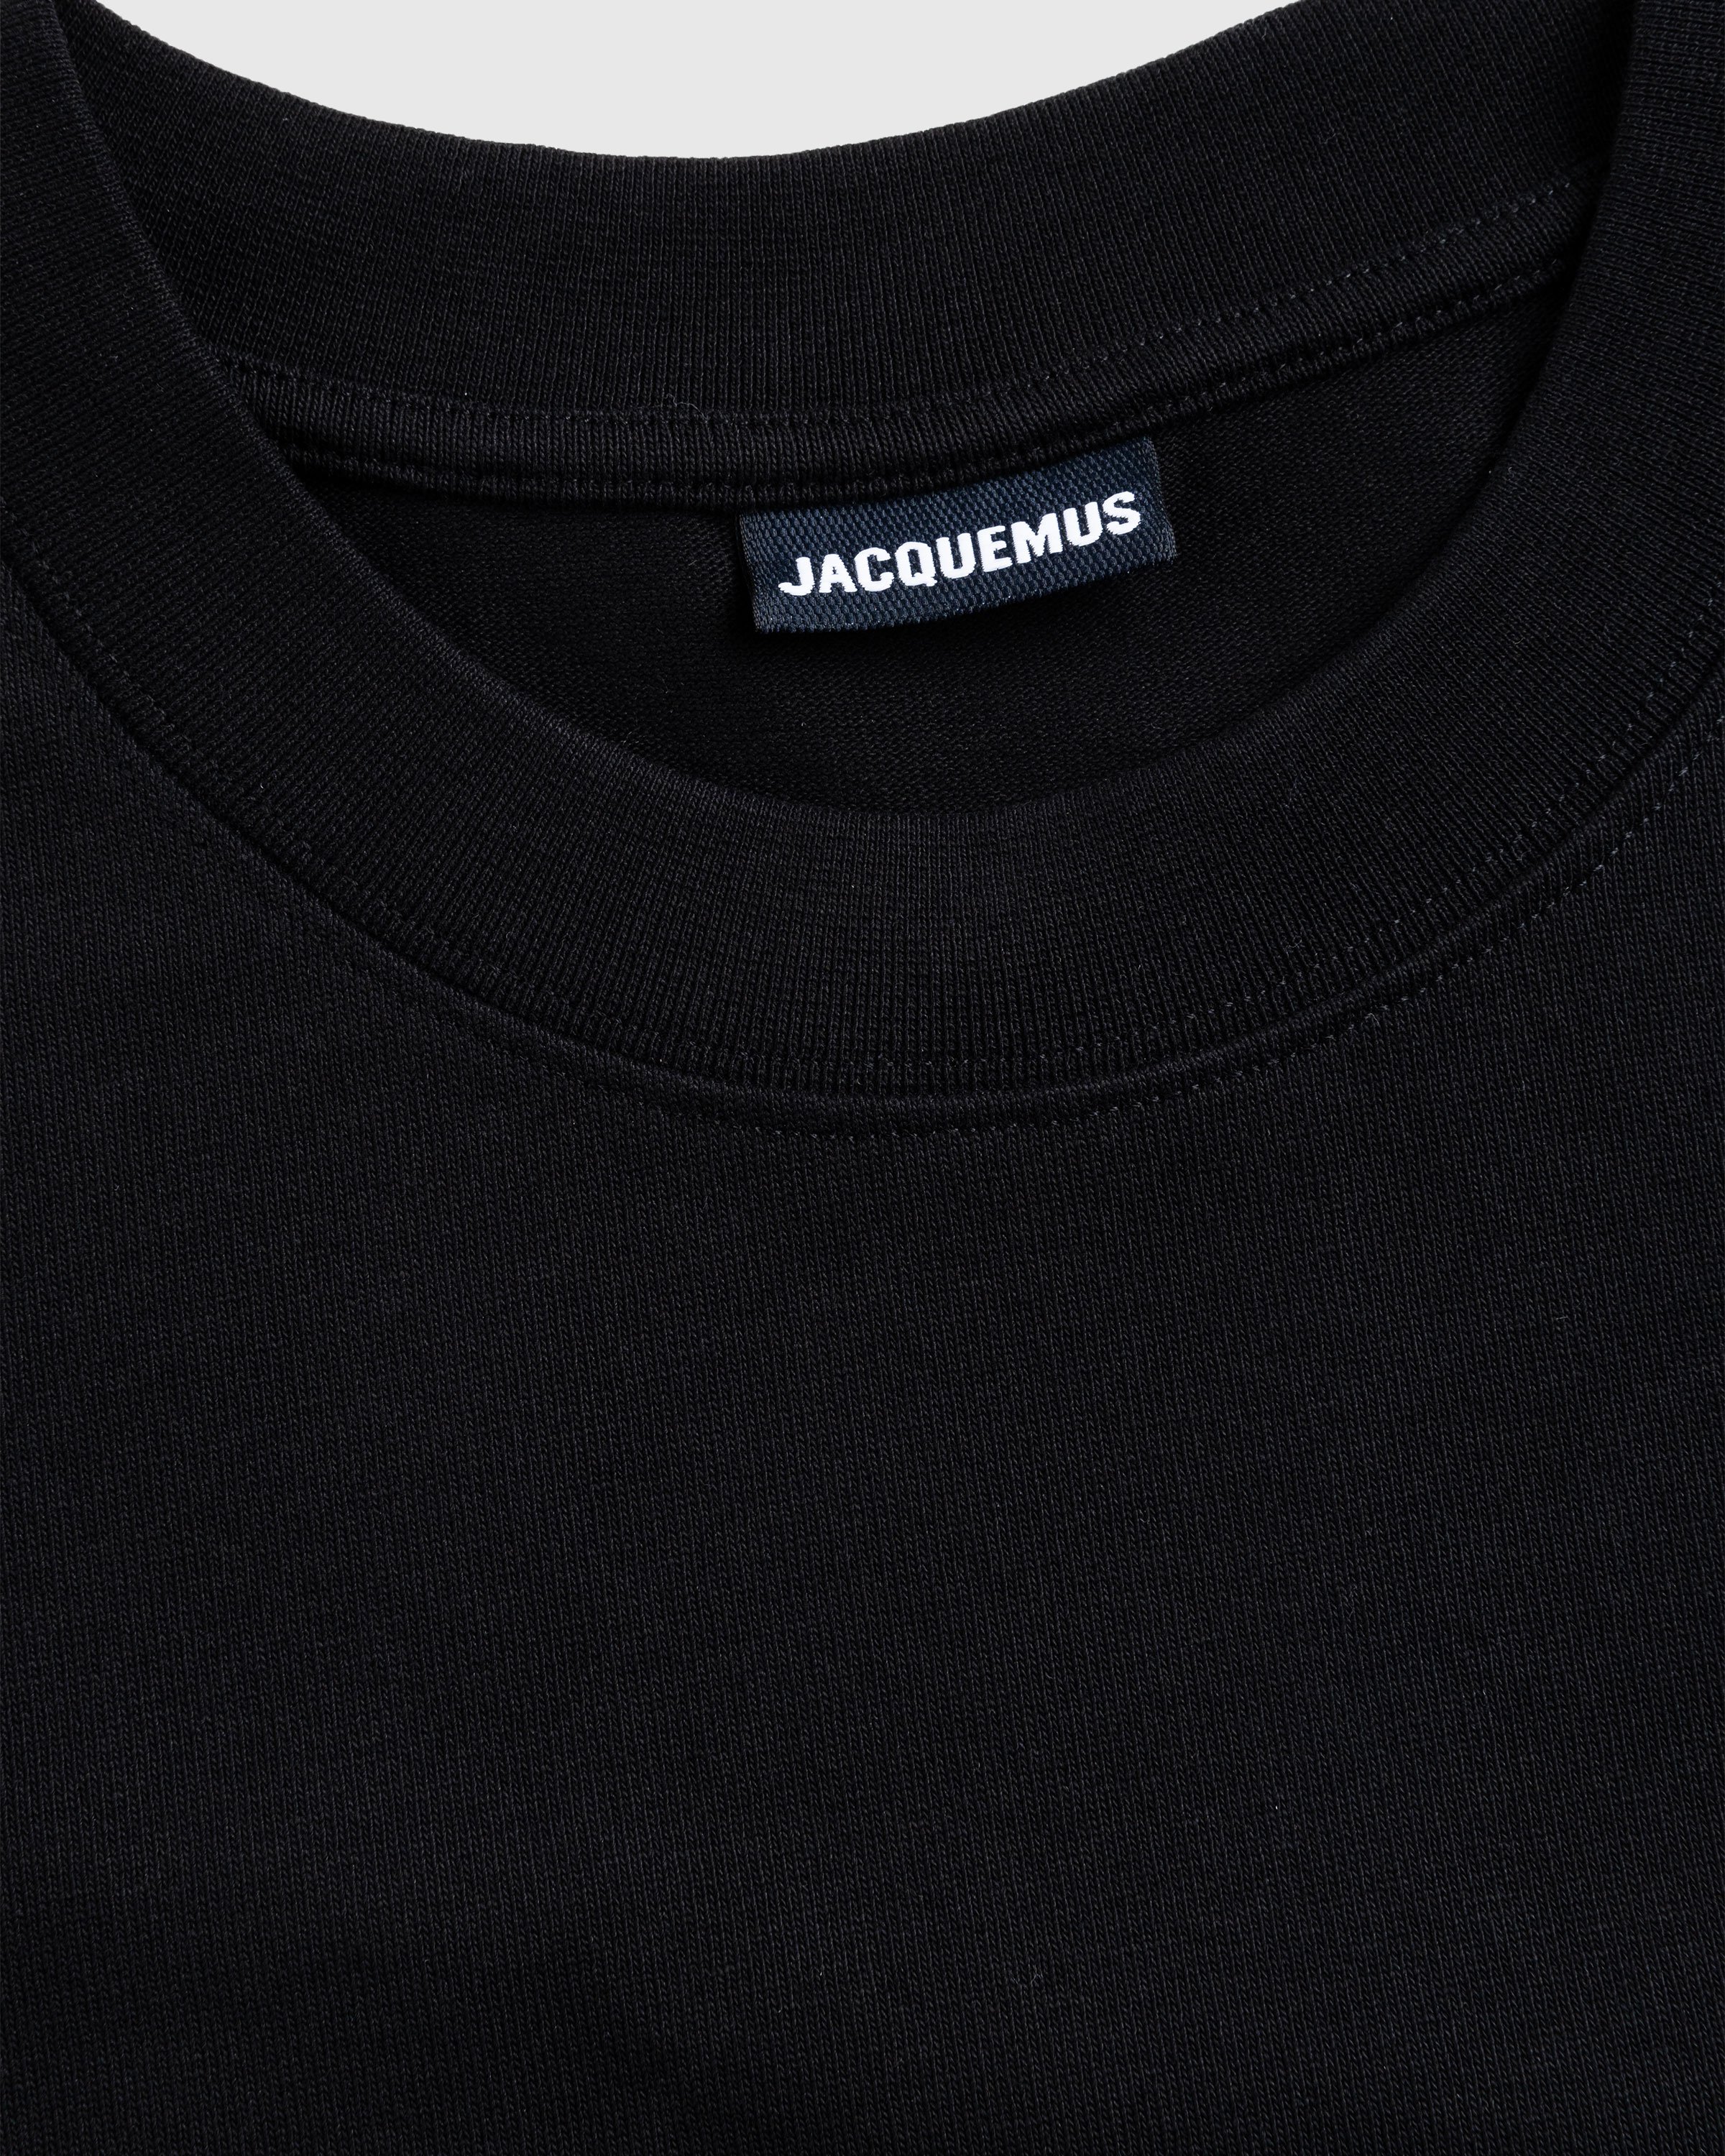 JACQUEMUS - Le T-Shirt Gros Grain Black - Clothing - Black - Image 6